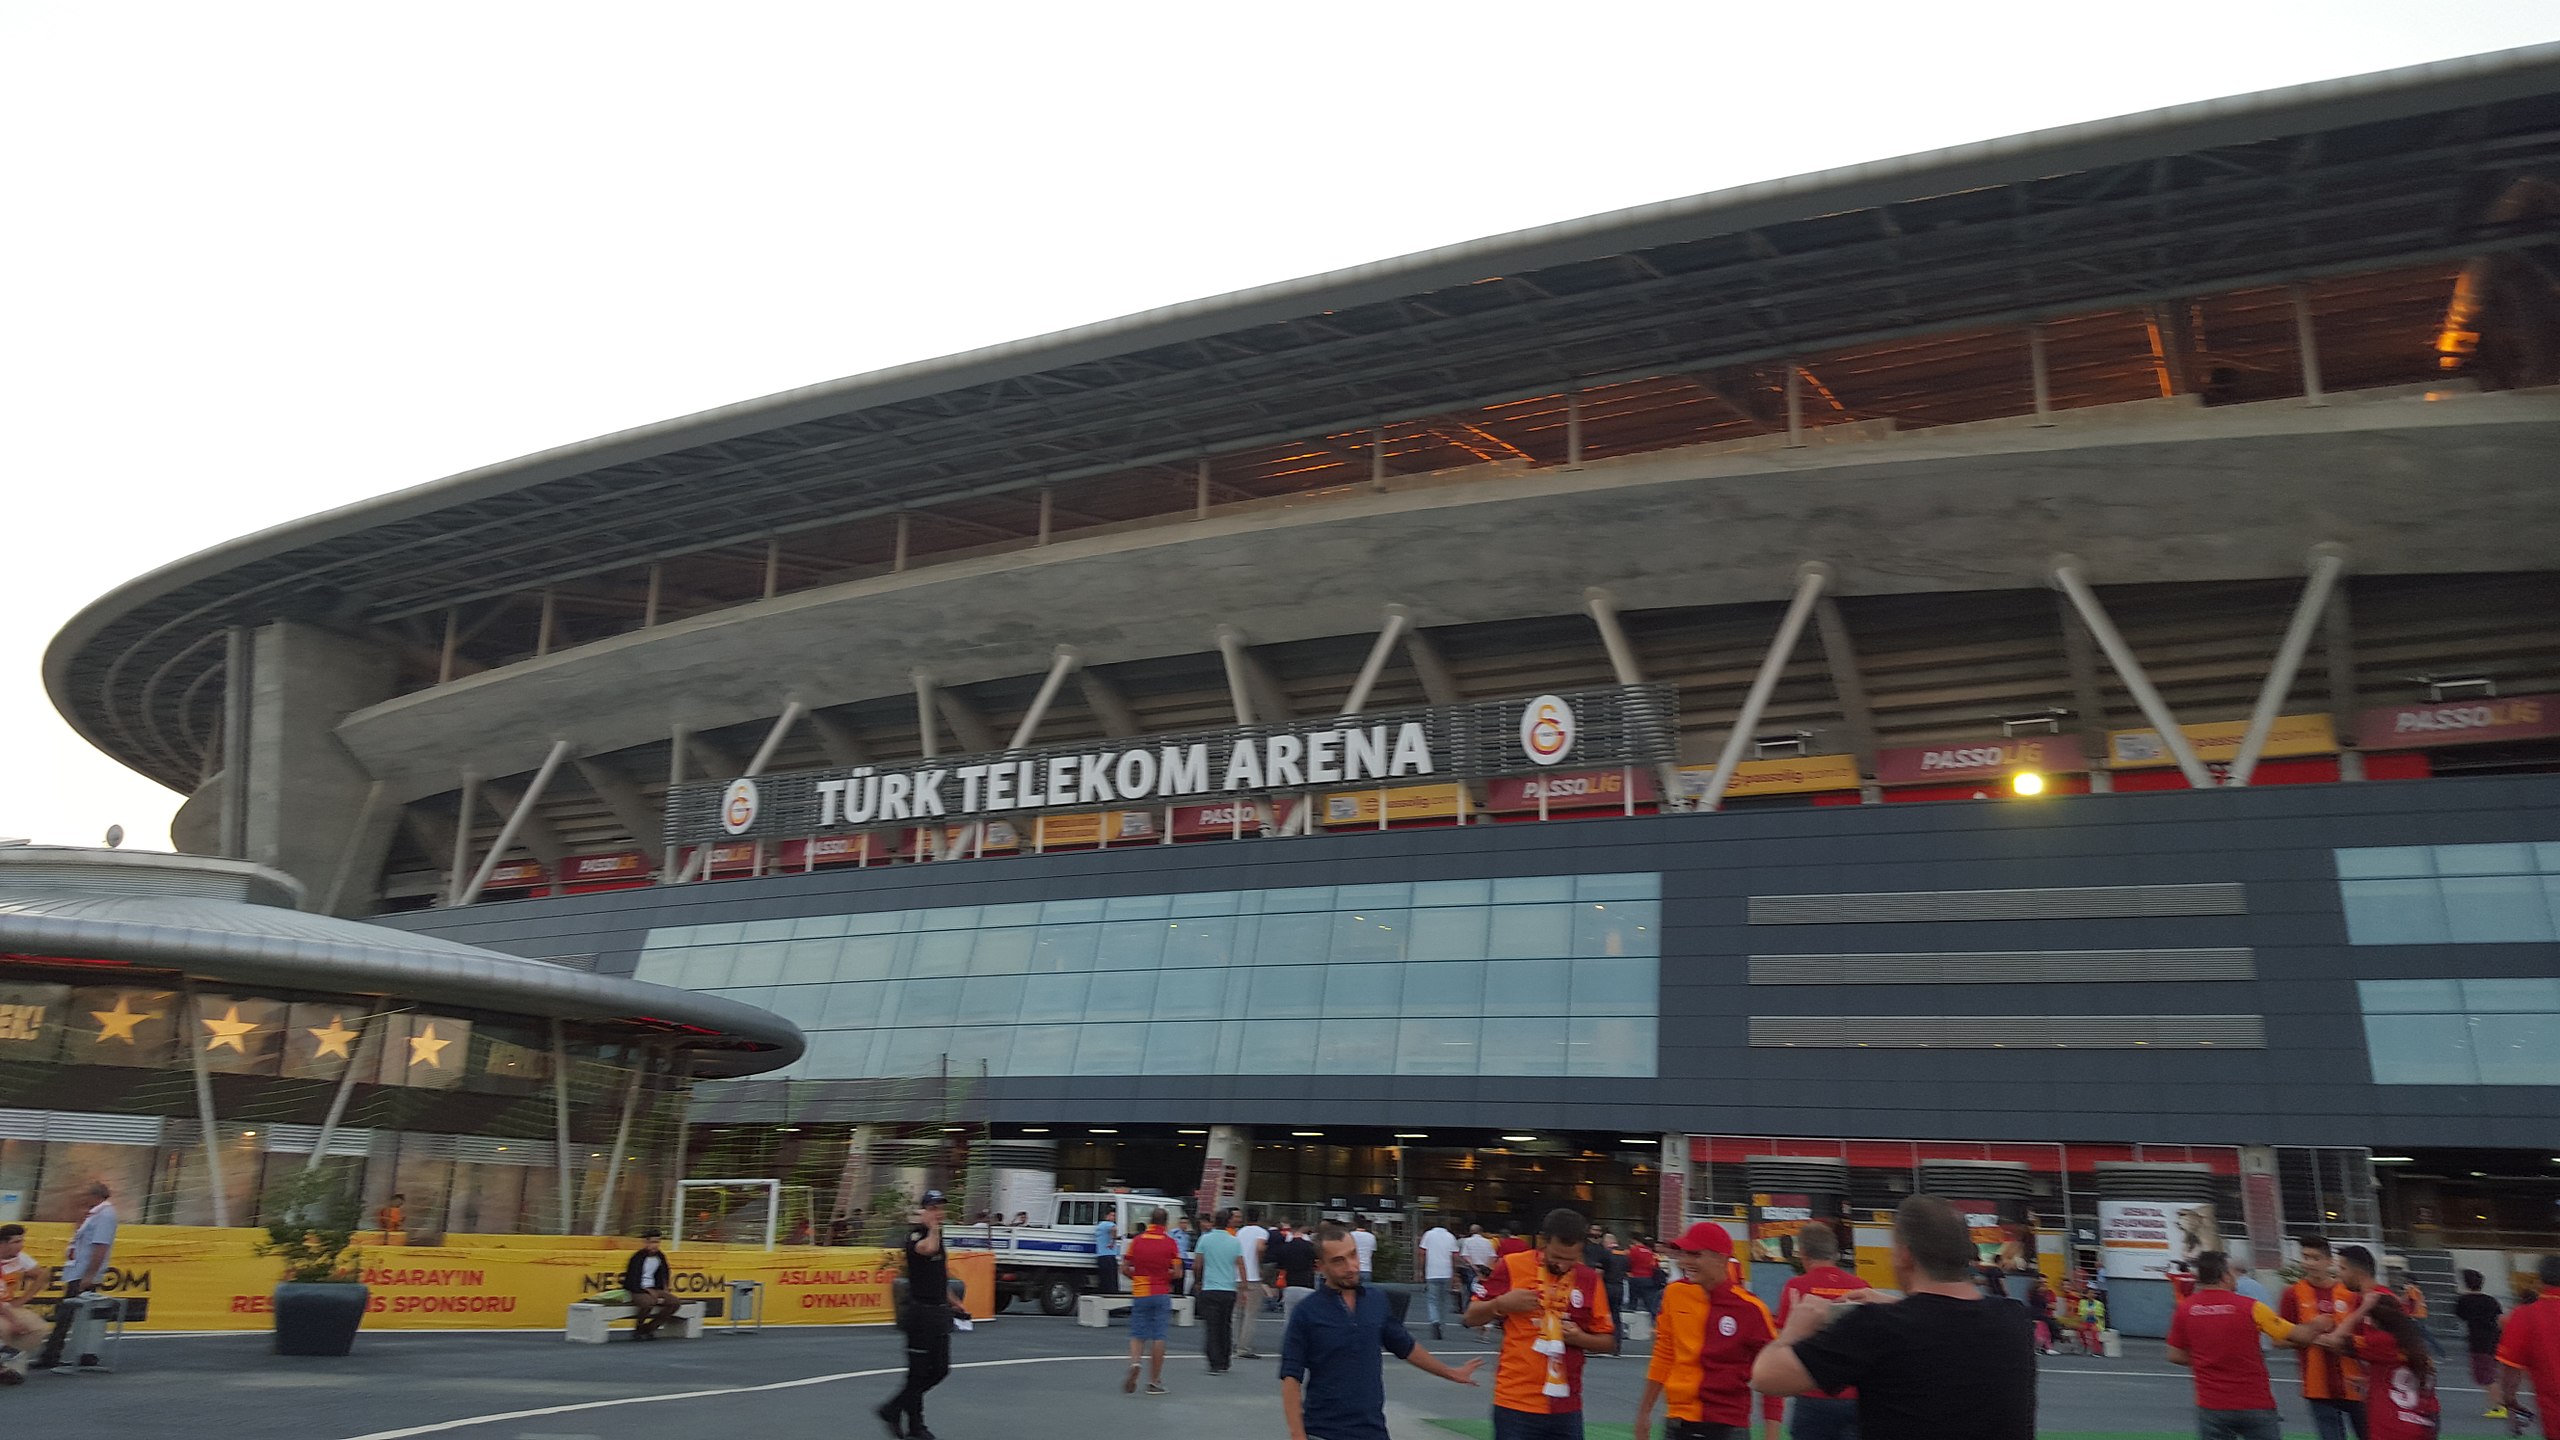 Live Karagumruk vs Galatasaray Streaming Online Link 5